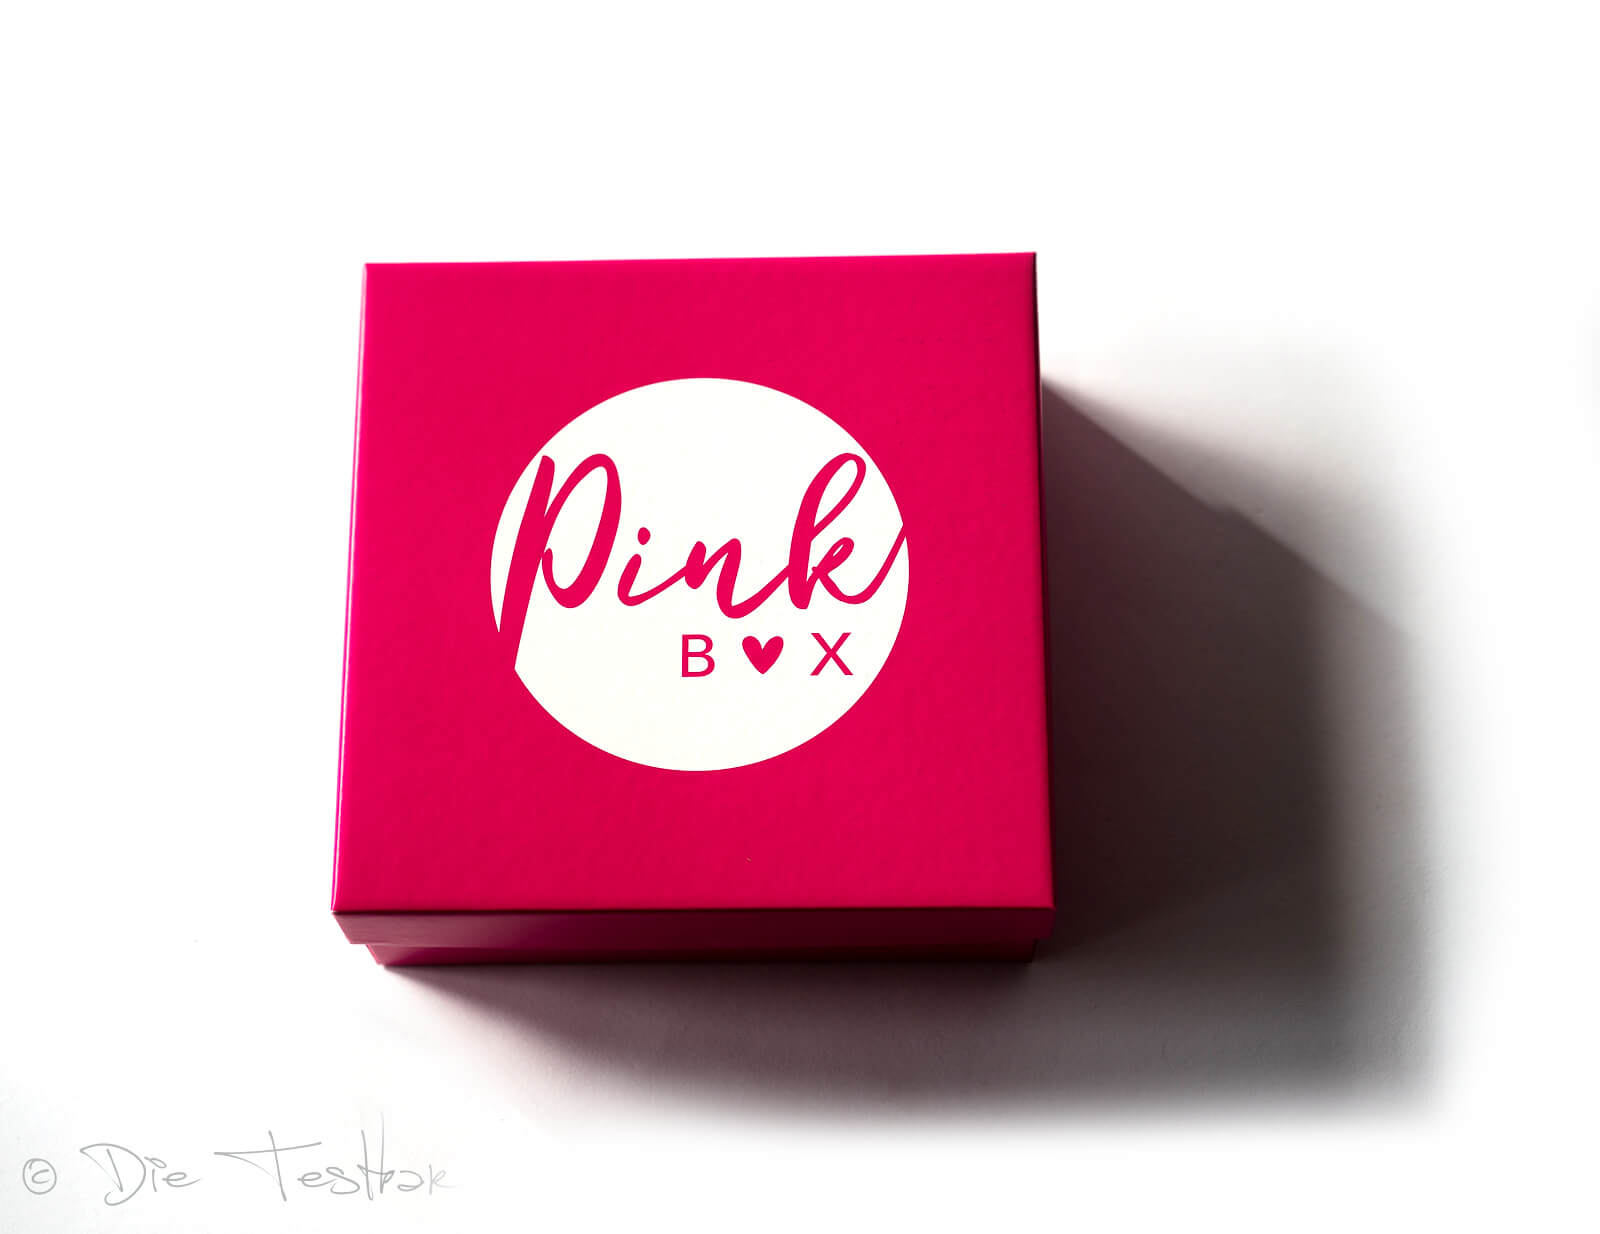 DIE PINK BOX im Oktober 2020 – Pink Box Boho Beauty 2020